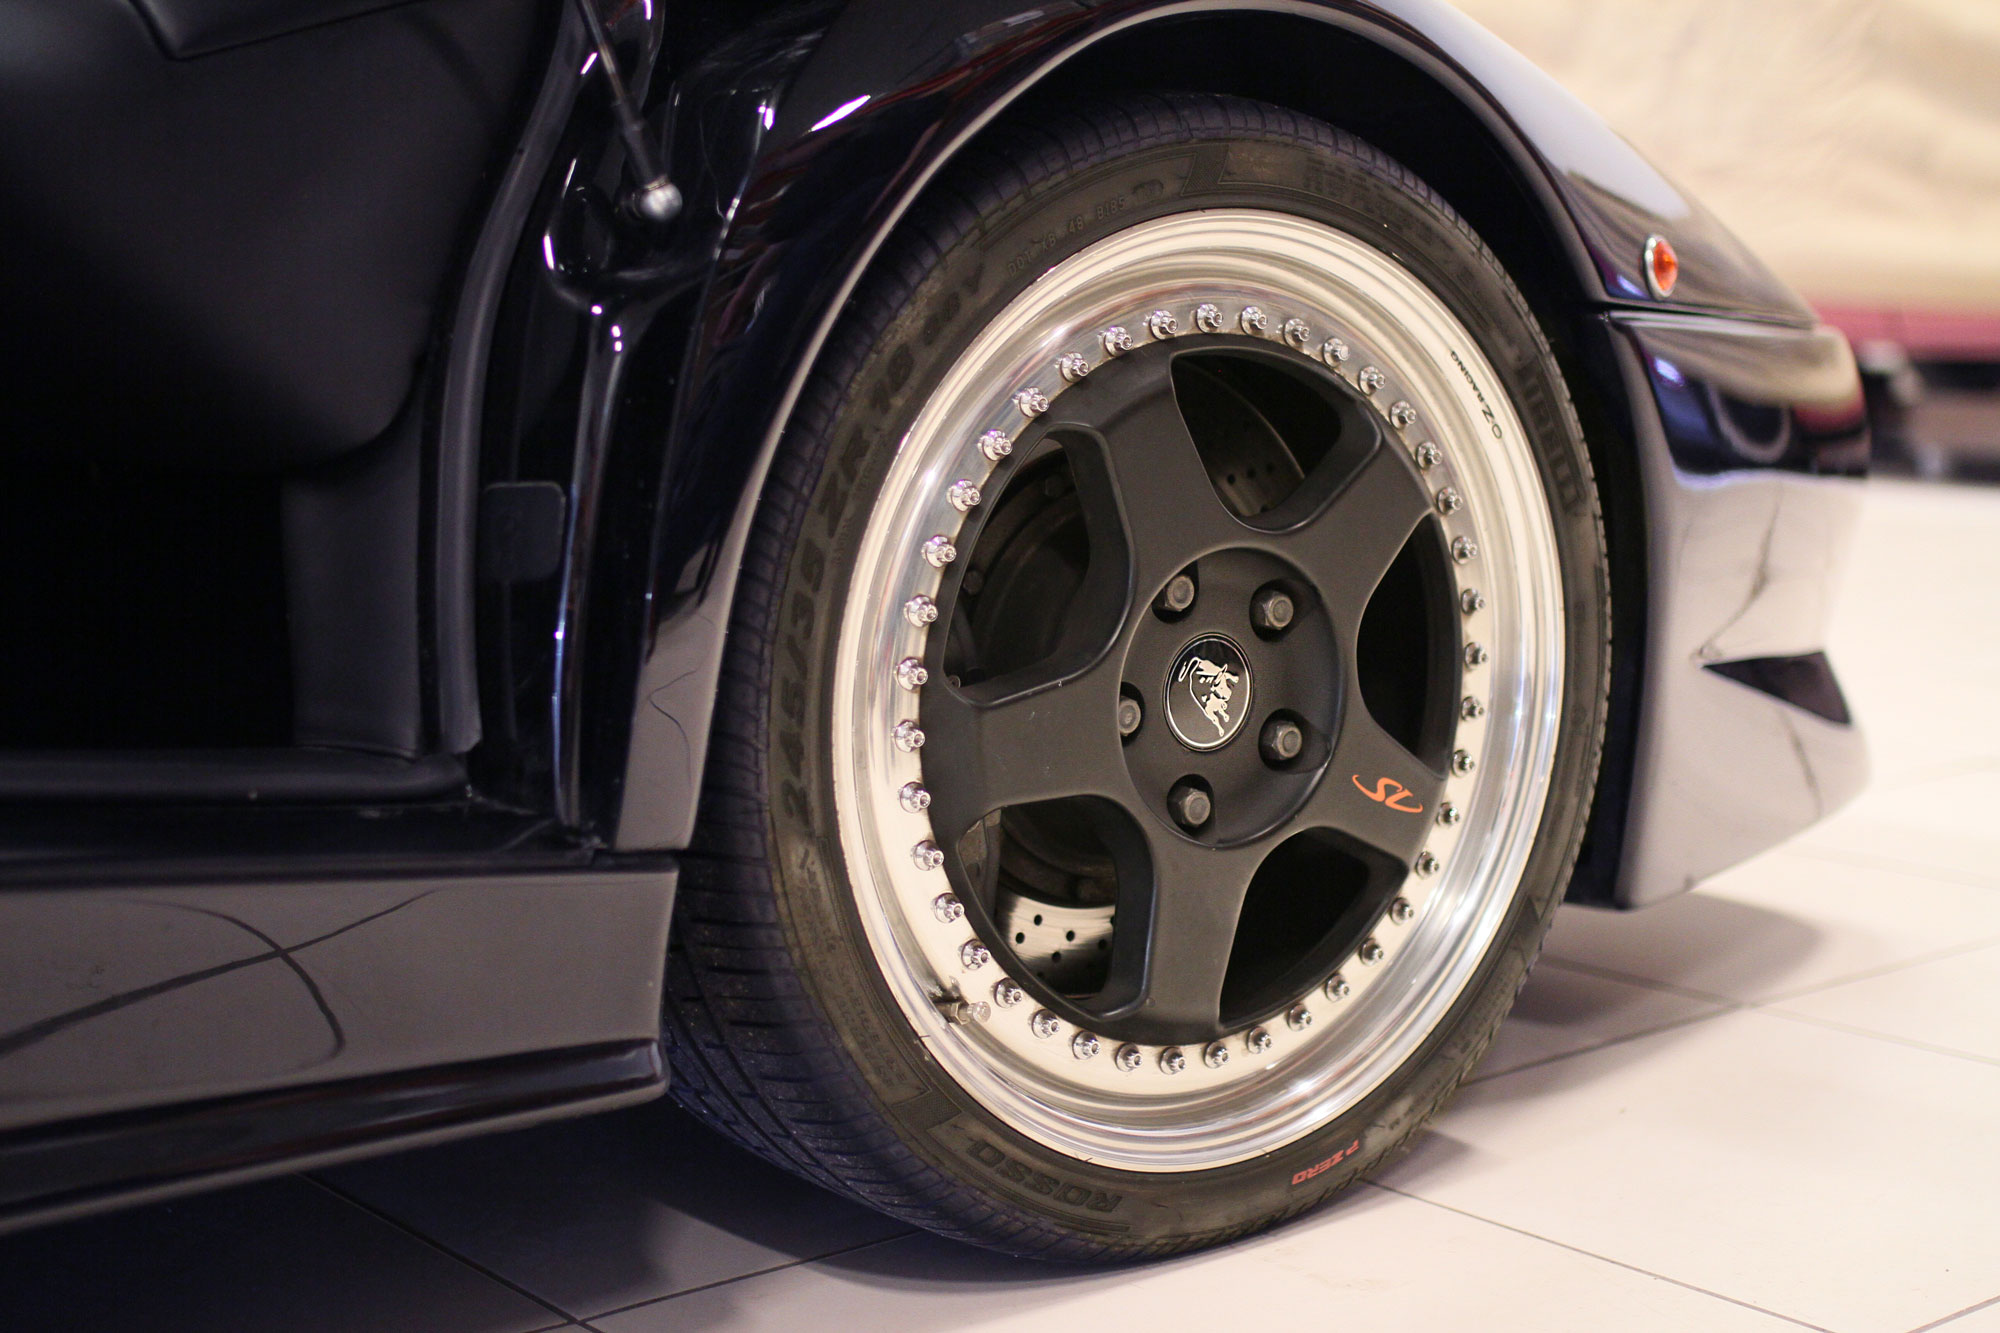 Devils Black Lamborghini Diabo SV standing on the garage floor with amazing black and silver rims